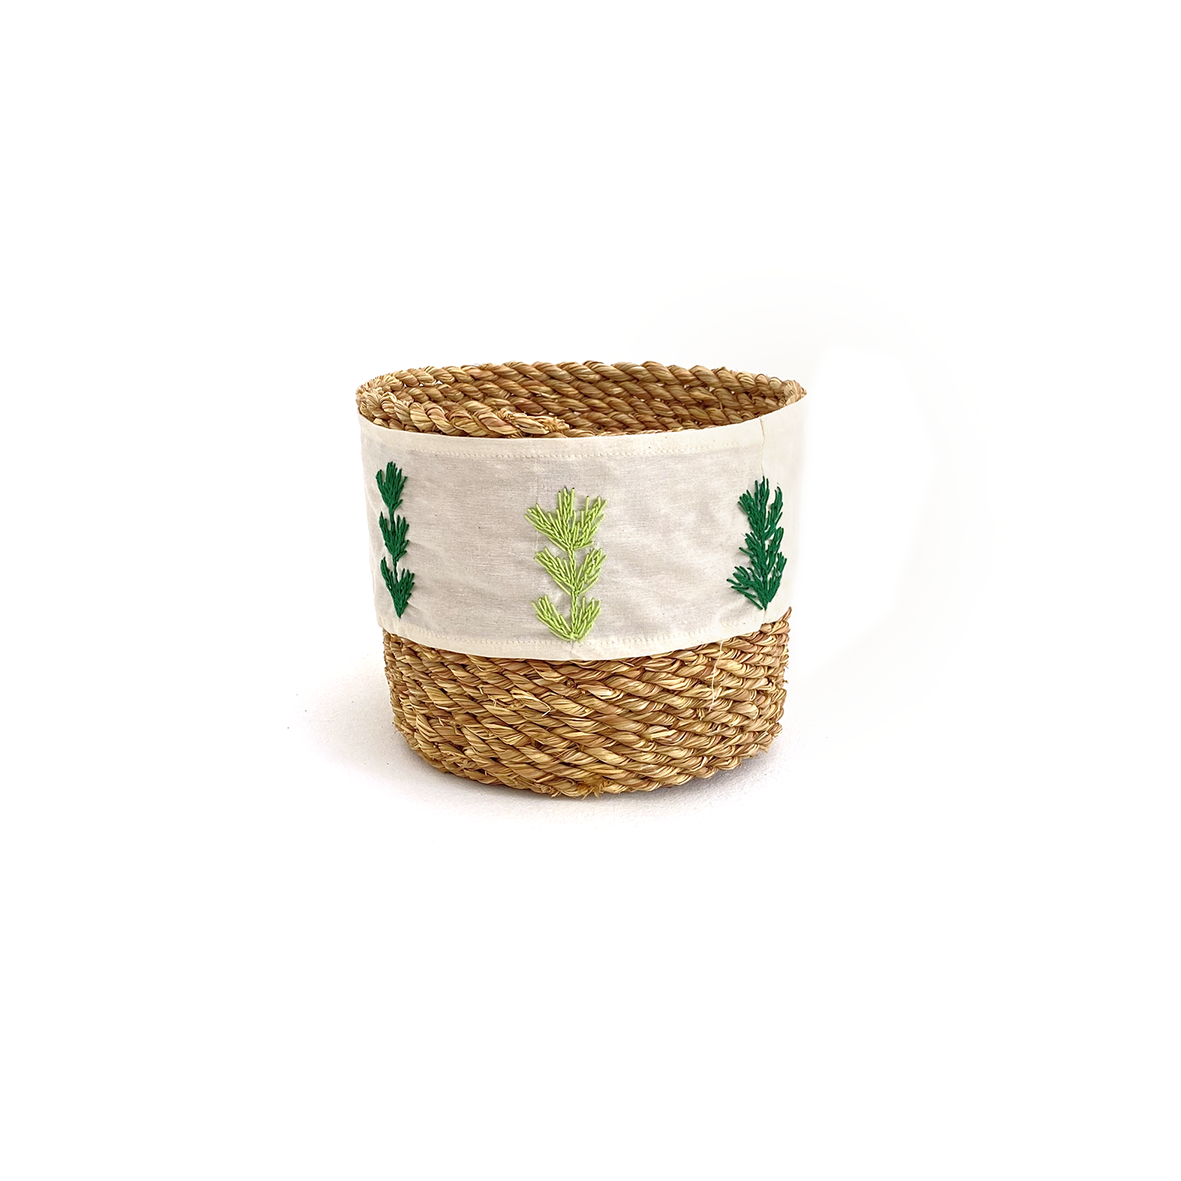 Halfa basket with embroidered ribbon سلة حلفا مع شريط قماش مطرز